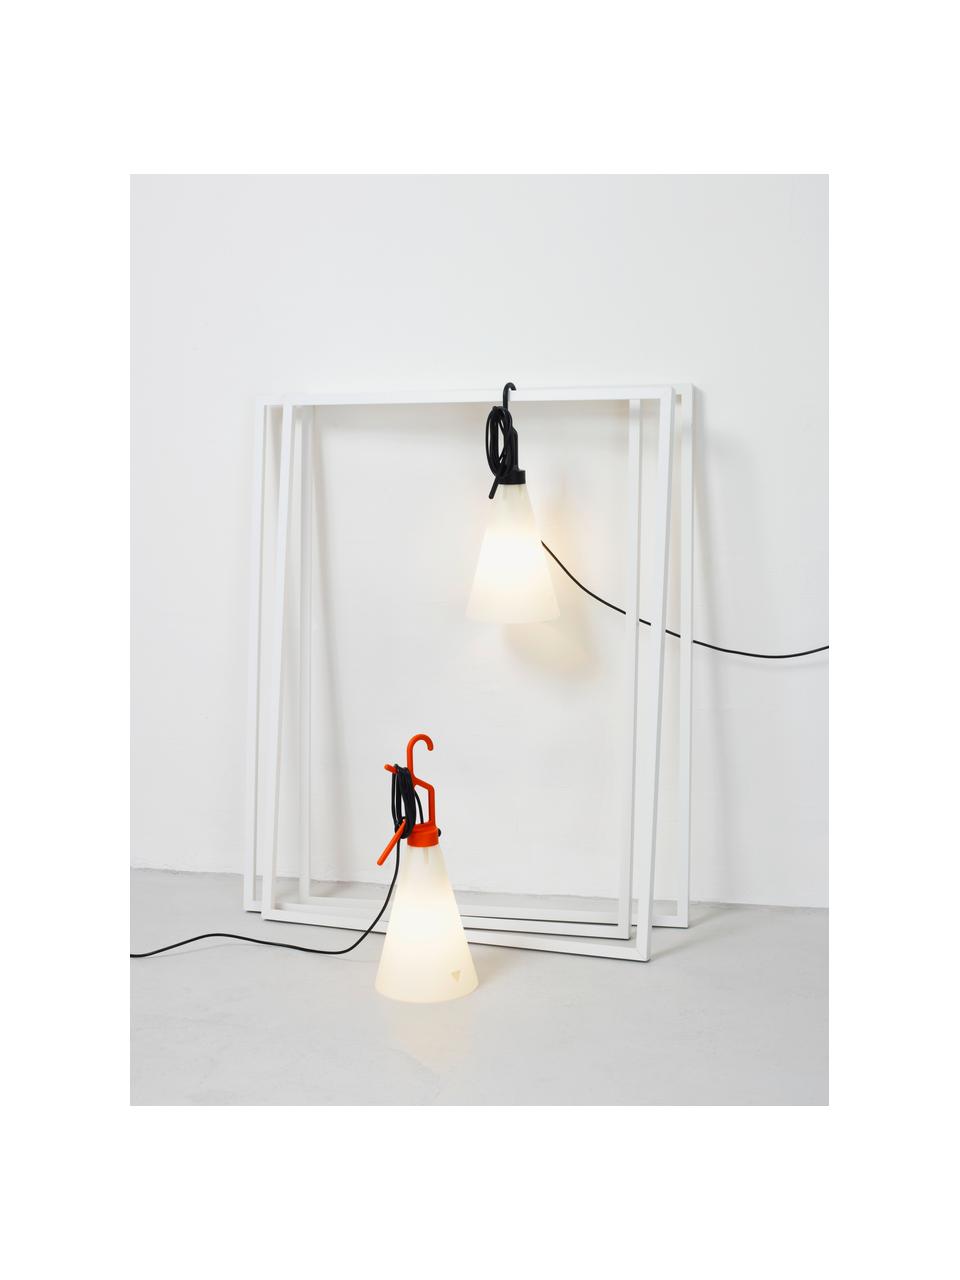 Tafellamp Mayday, Kunststof, Zwart, wit, Ø 23 x H 55 cm